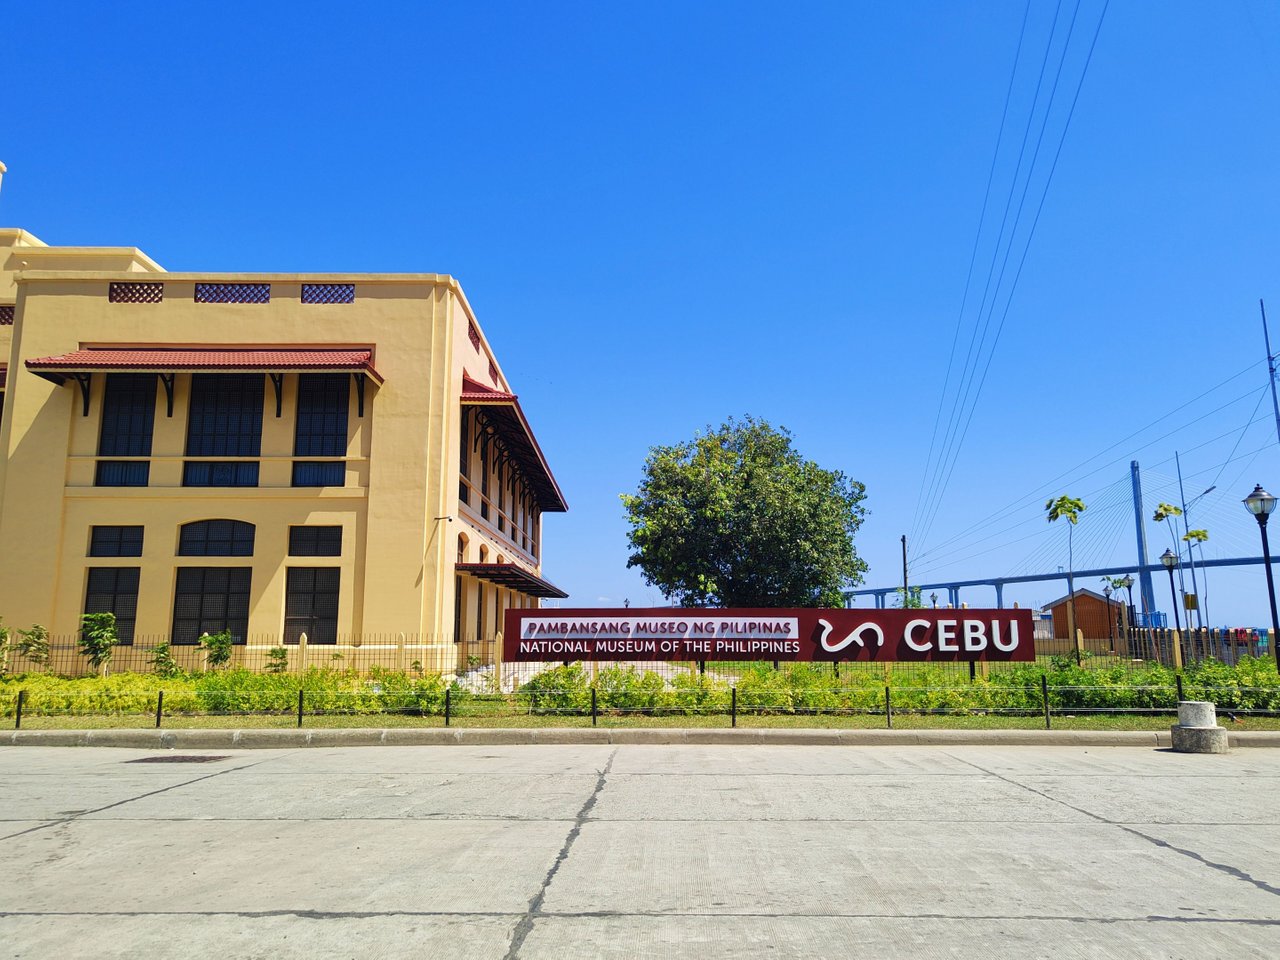 NMP-Cebu: Exploring Cebu's very first national museum